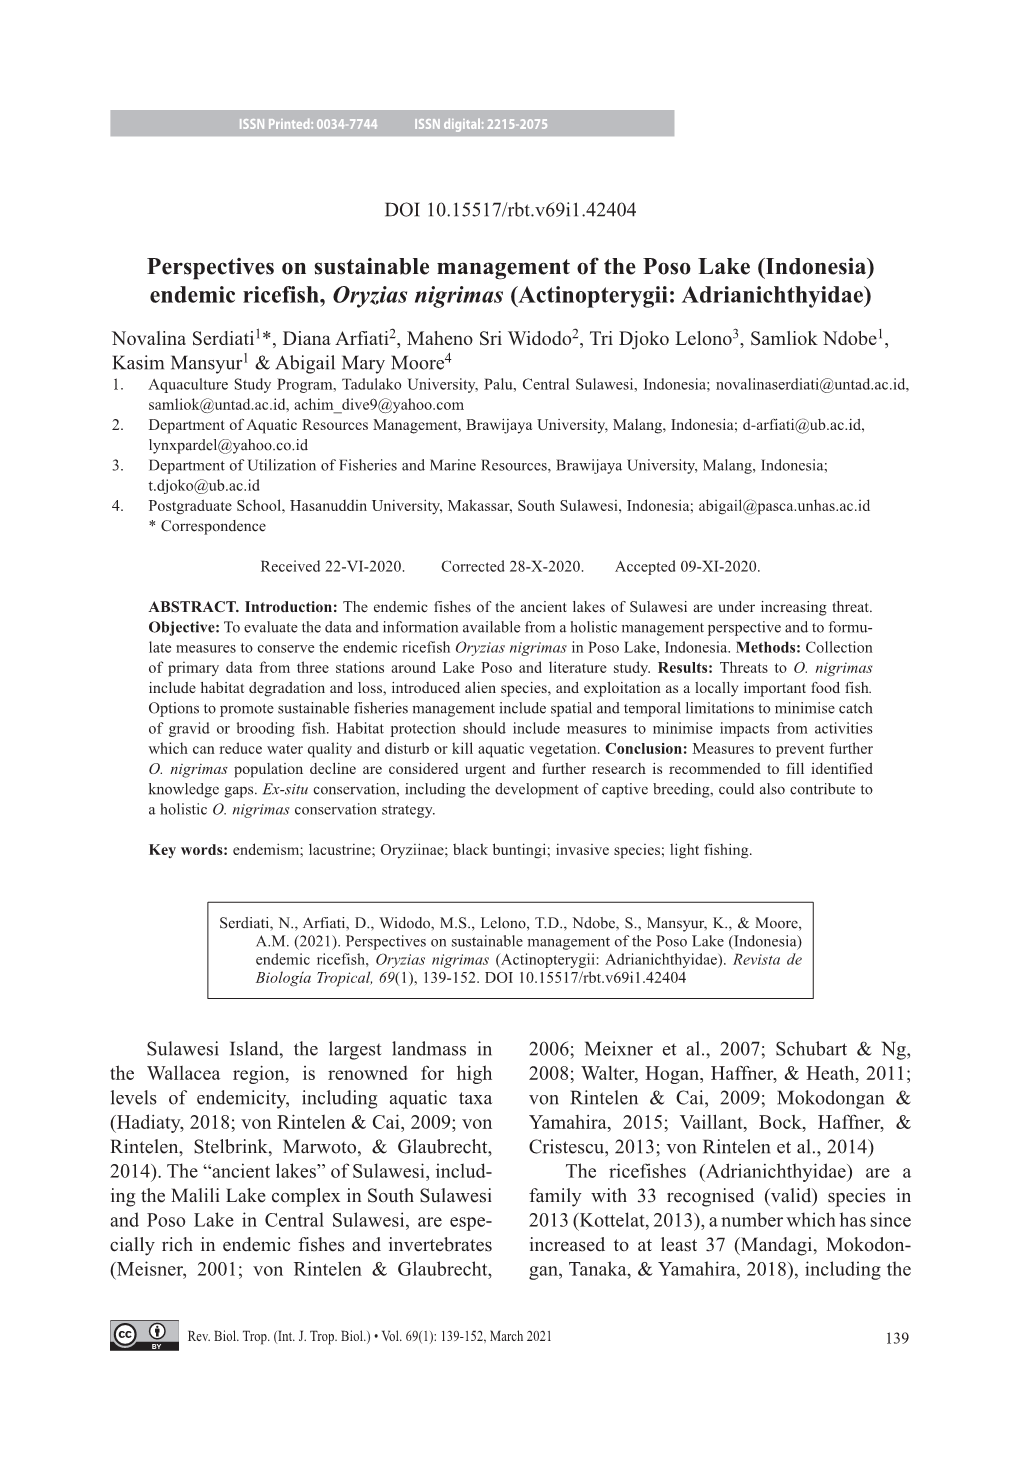 Perspectives on Sustainable Management of the Poso Lake (Indonesia) Endemic Ricefish, Oryzias Nigrimas (Actinopterygii: Adrianichthyidae)